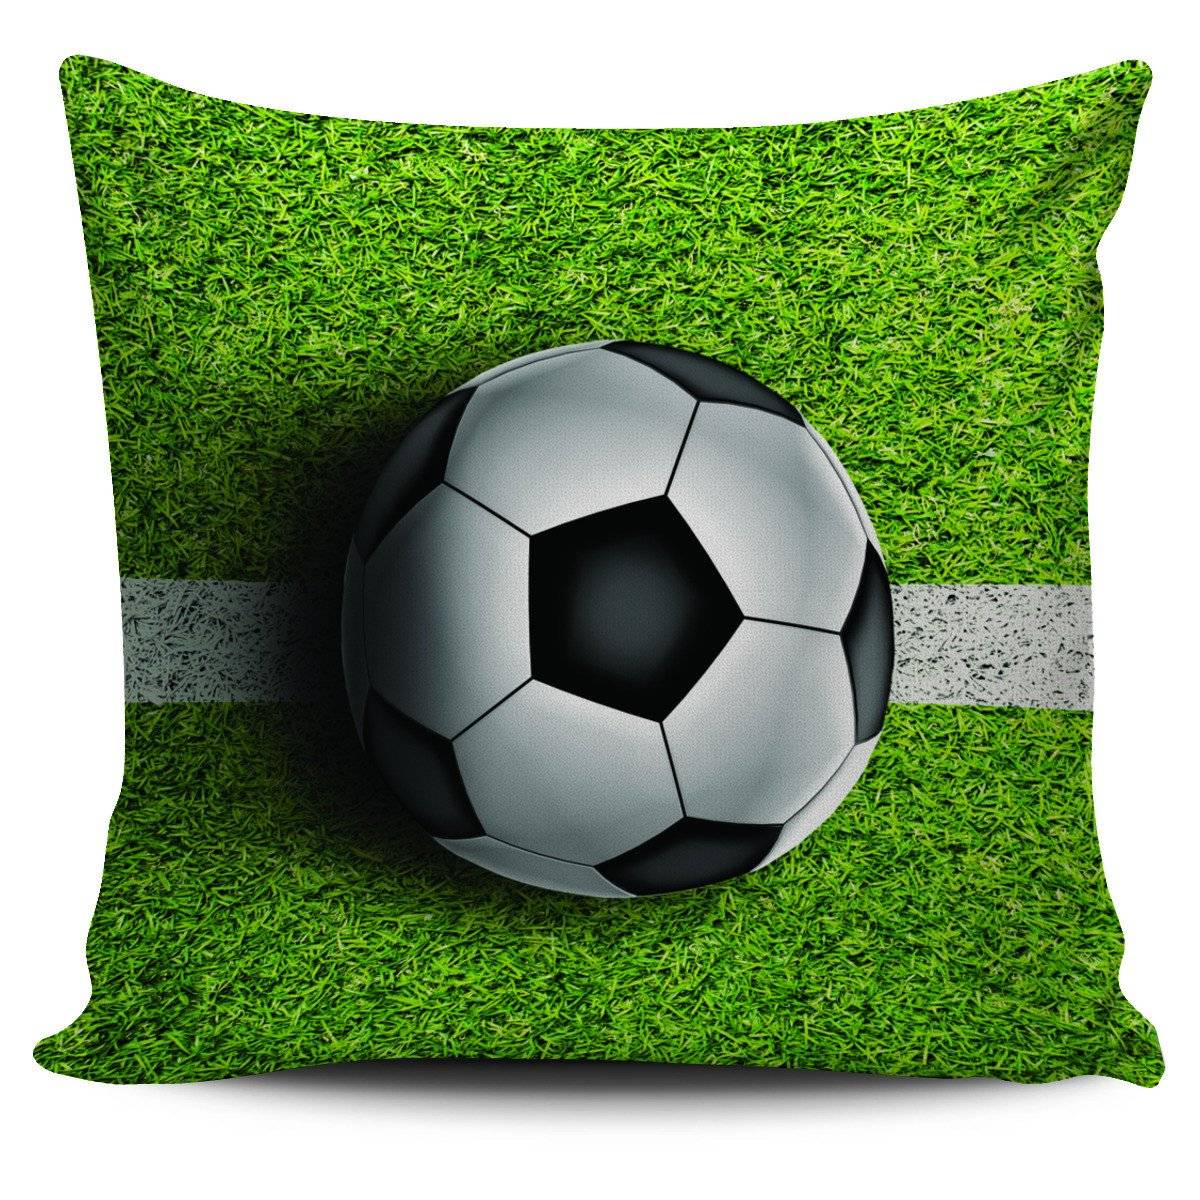 Soccer Pillowcase - Set Available